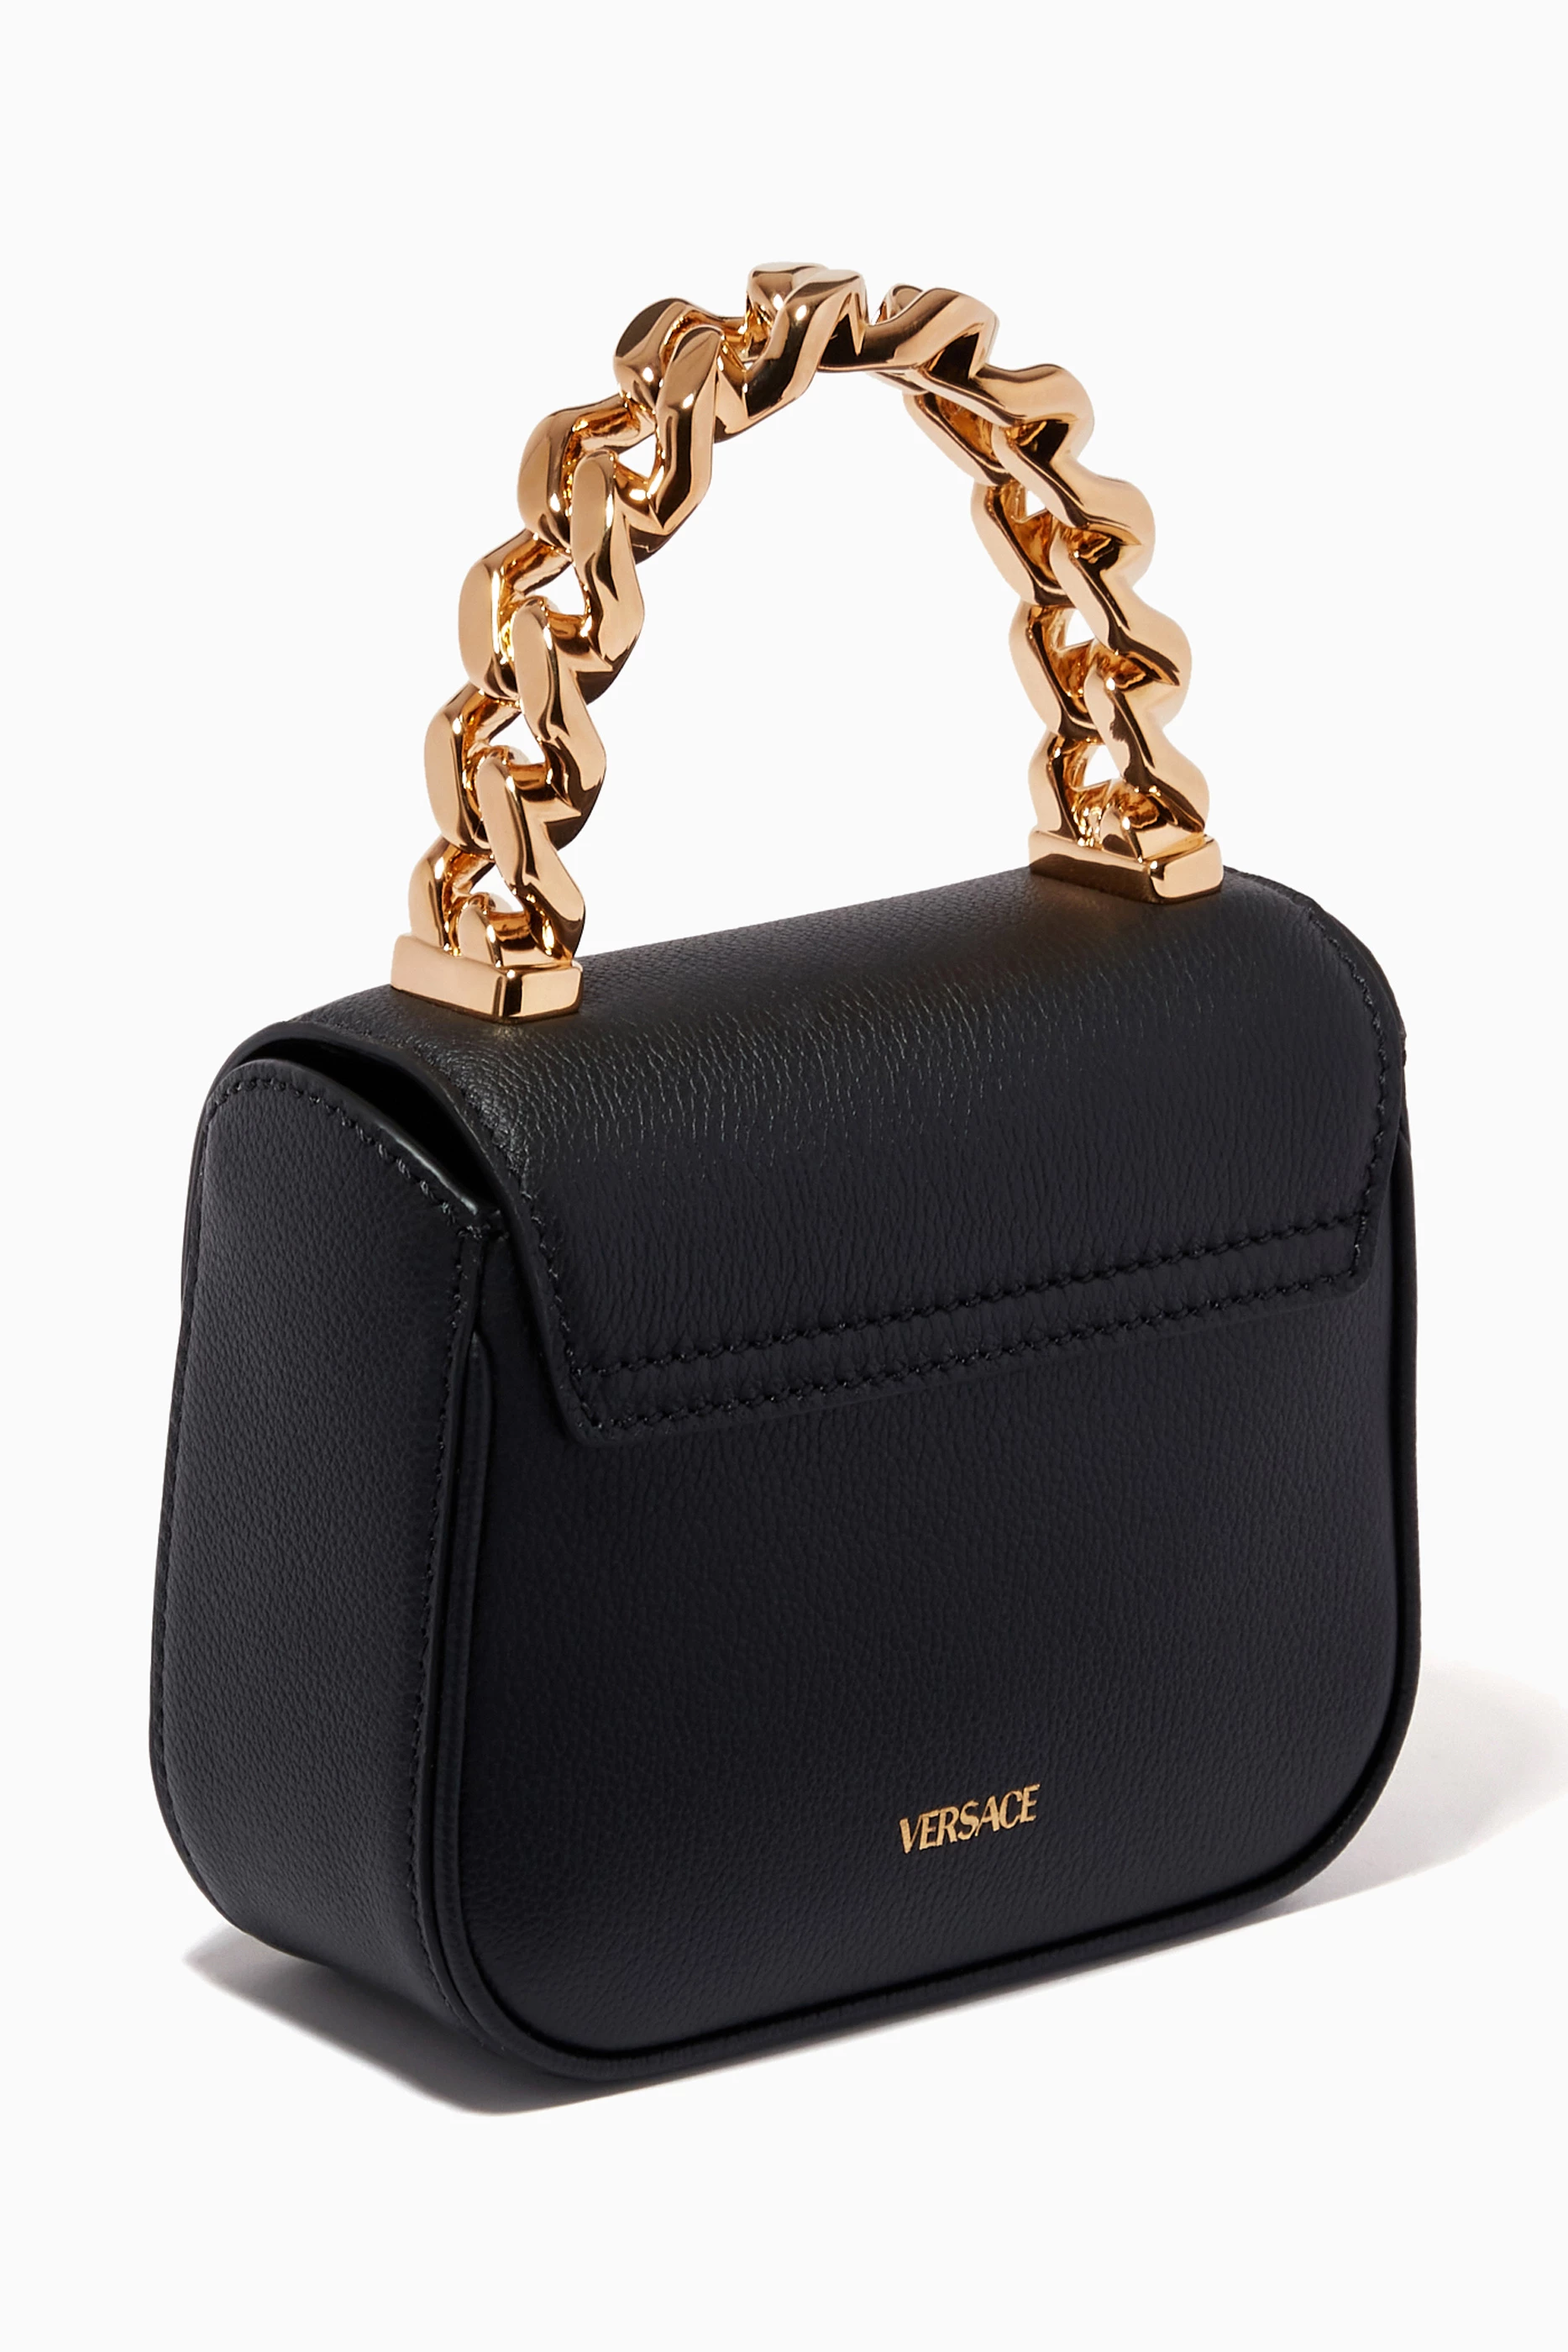 Versace La Medusa mini bag for Women - Gold in UAE